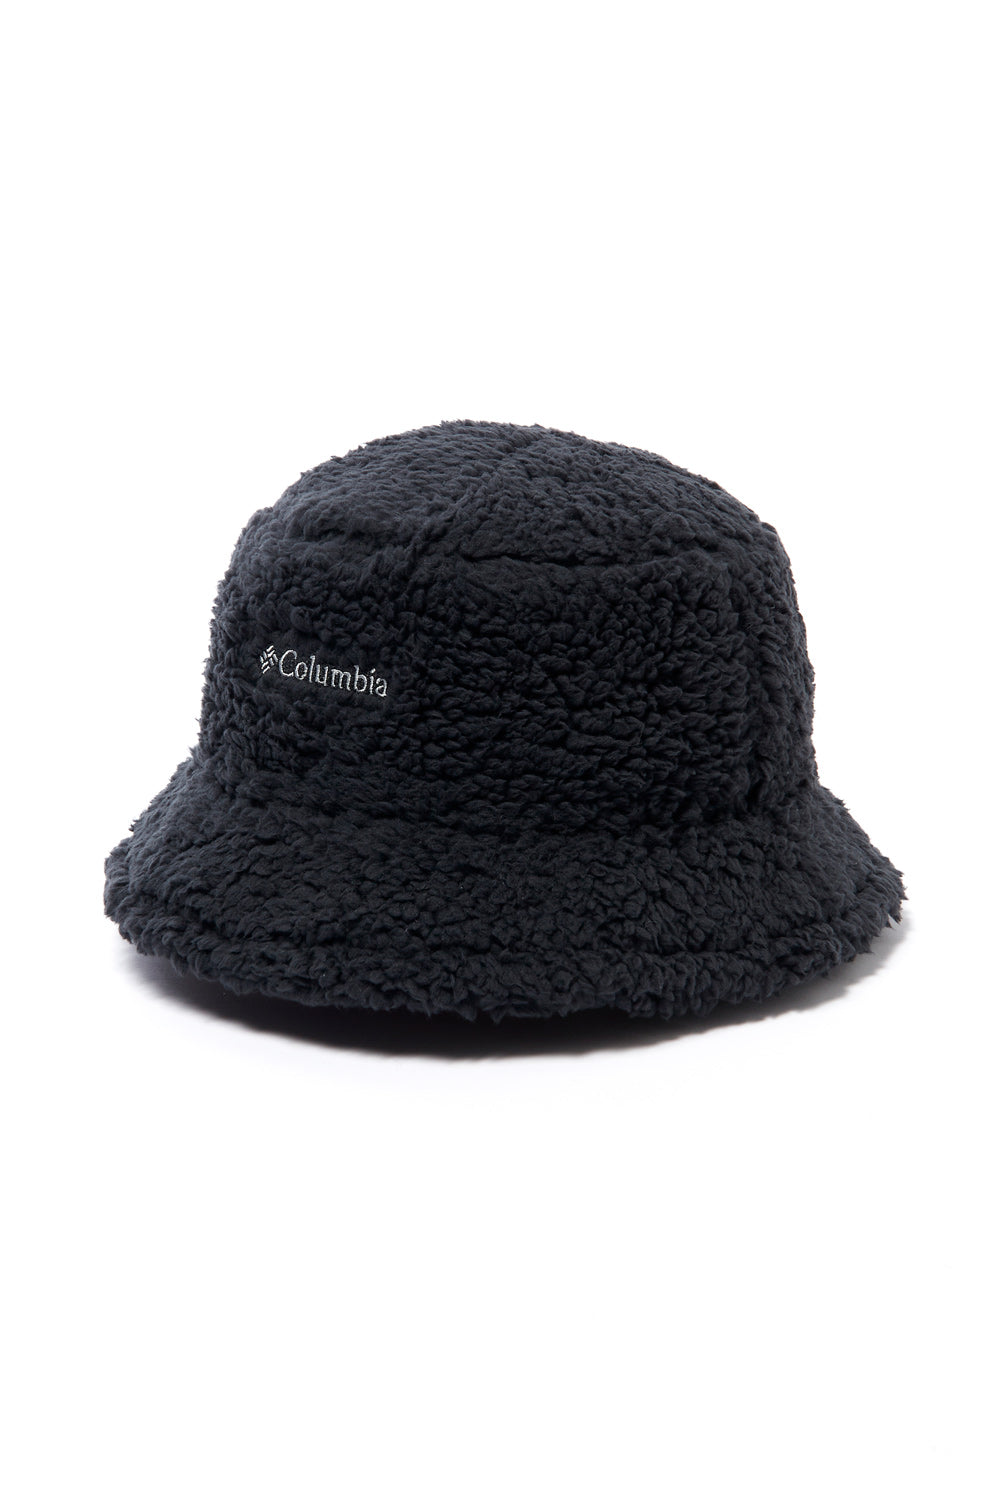 Columbia Winter Pass Reversible Bucket Hat - Black/Black